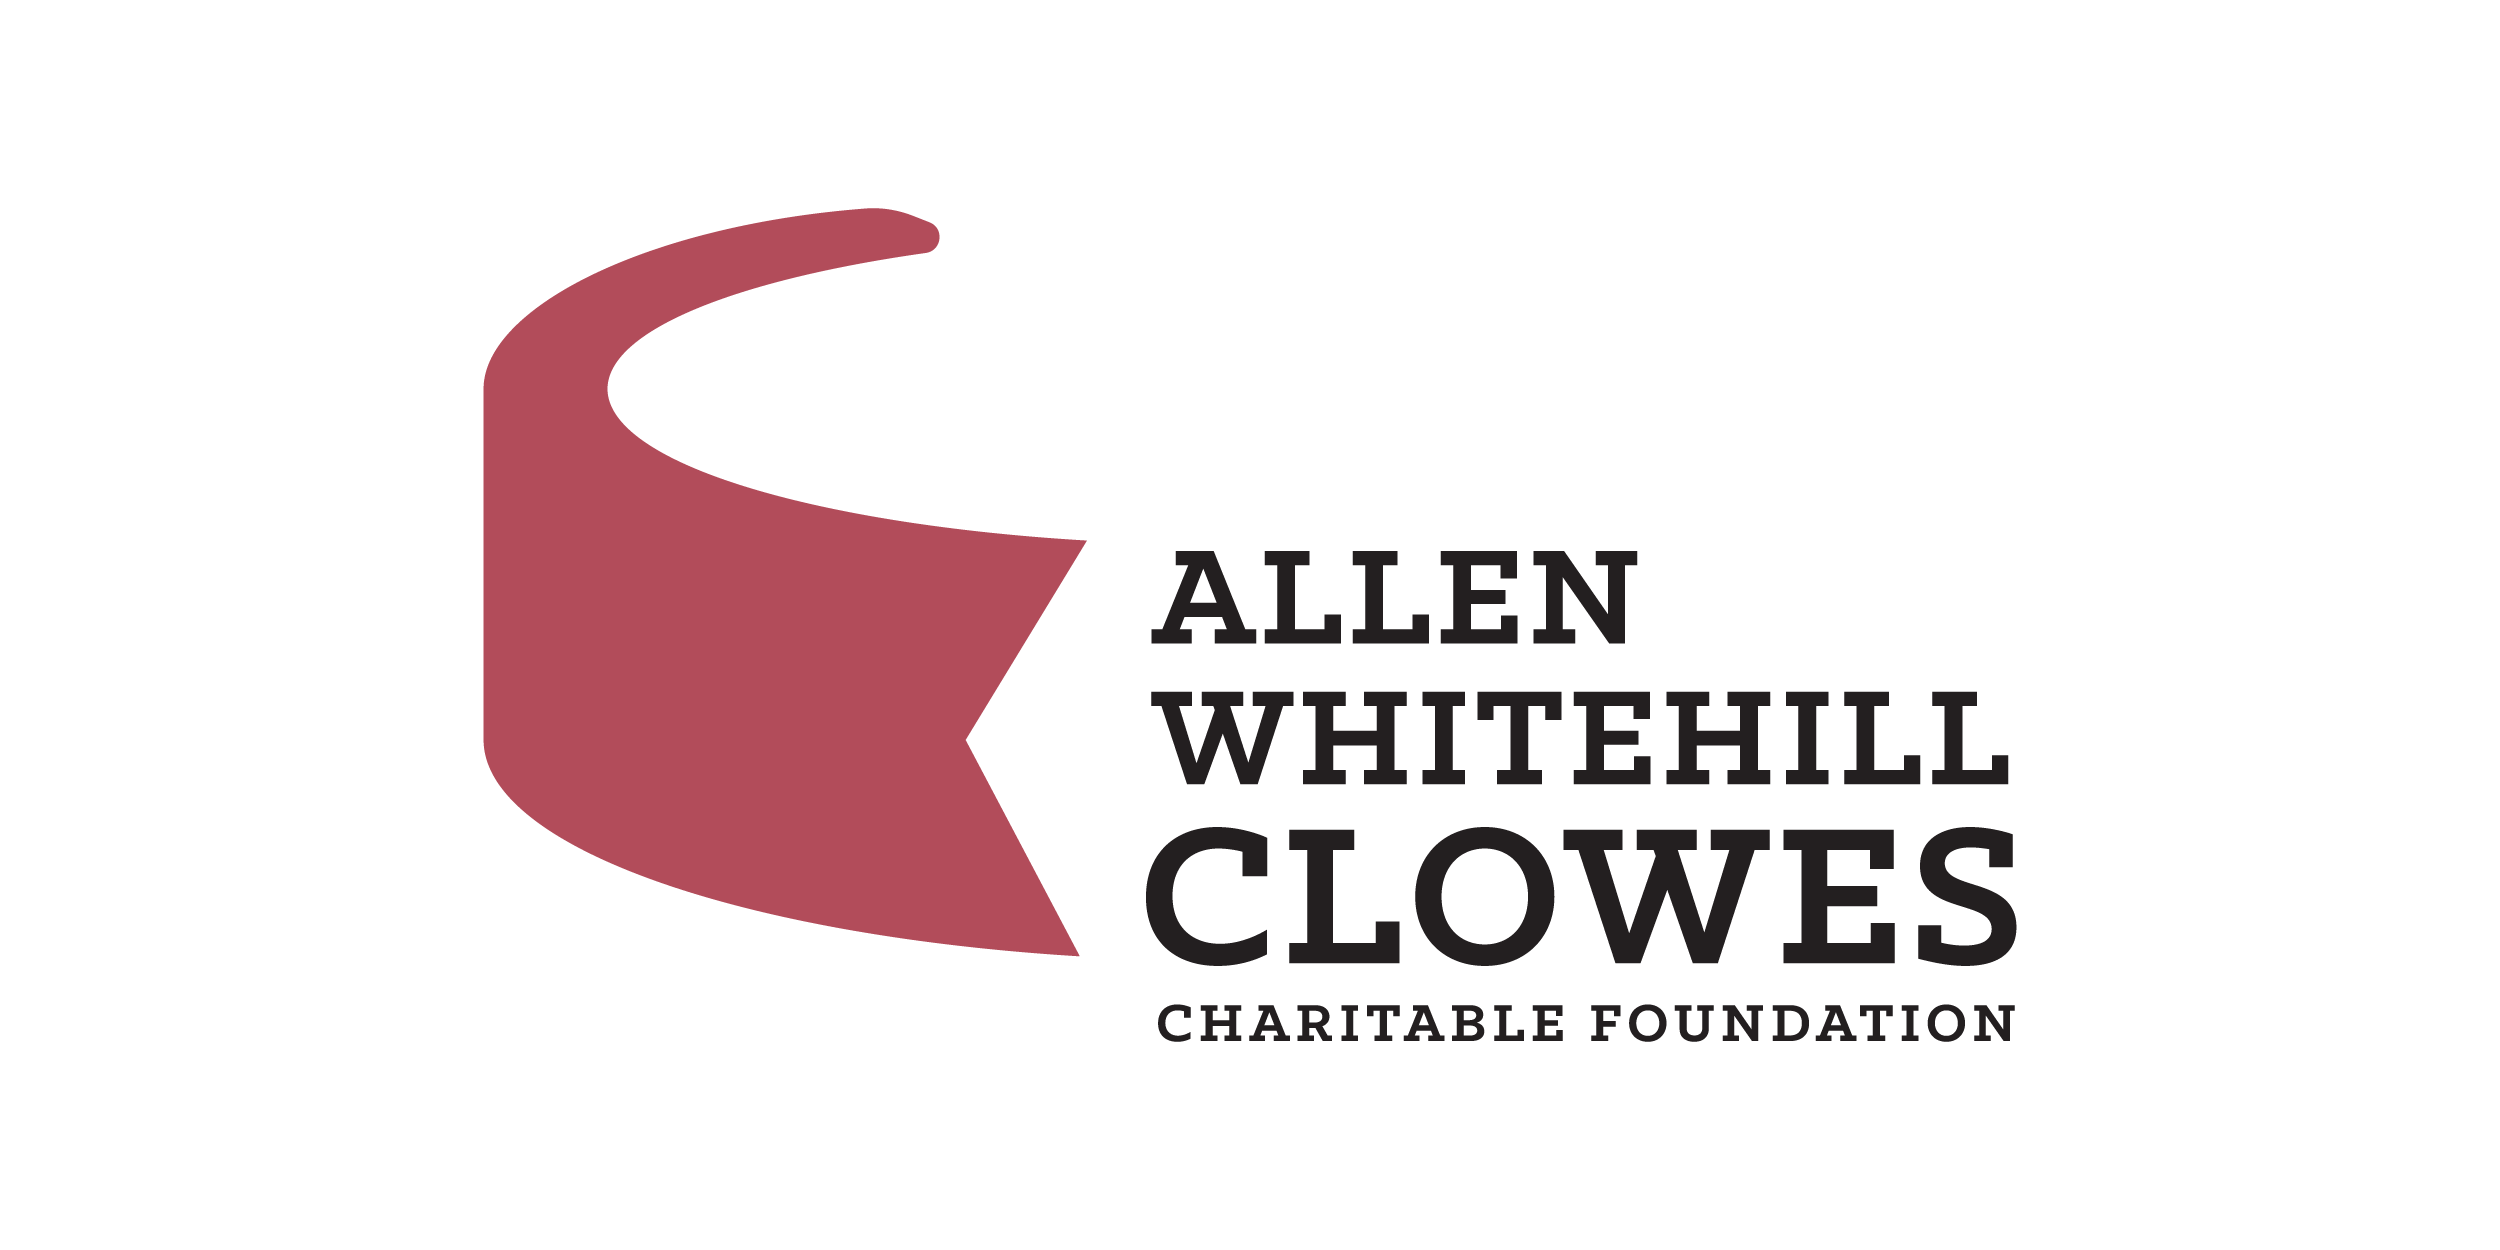 The Allen Whitehill Clowes Charitable Foundation